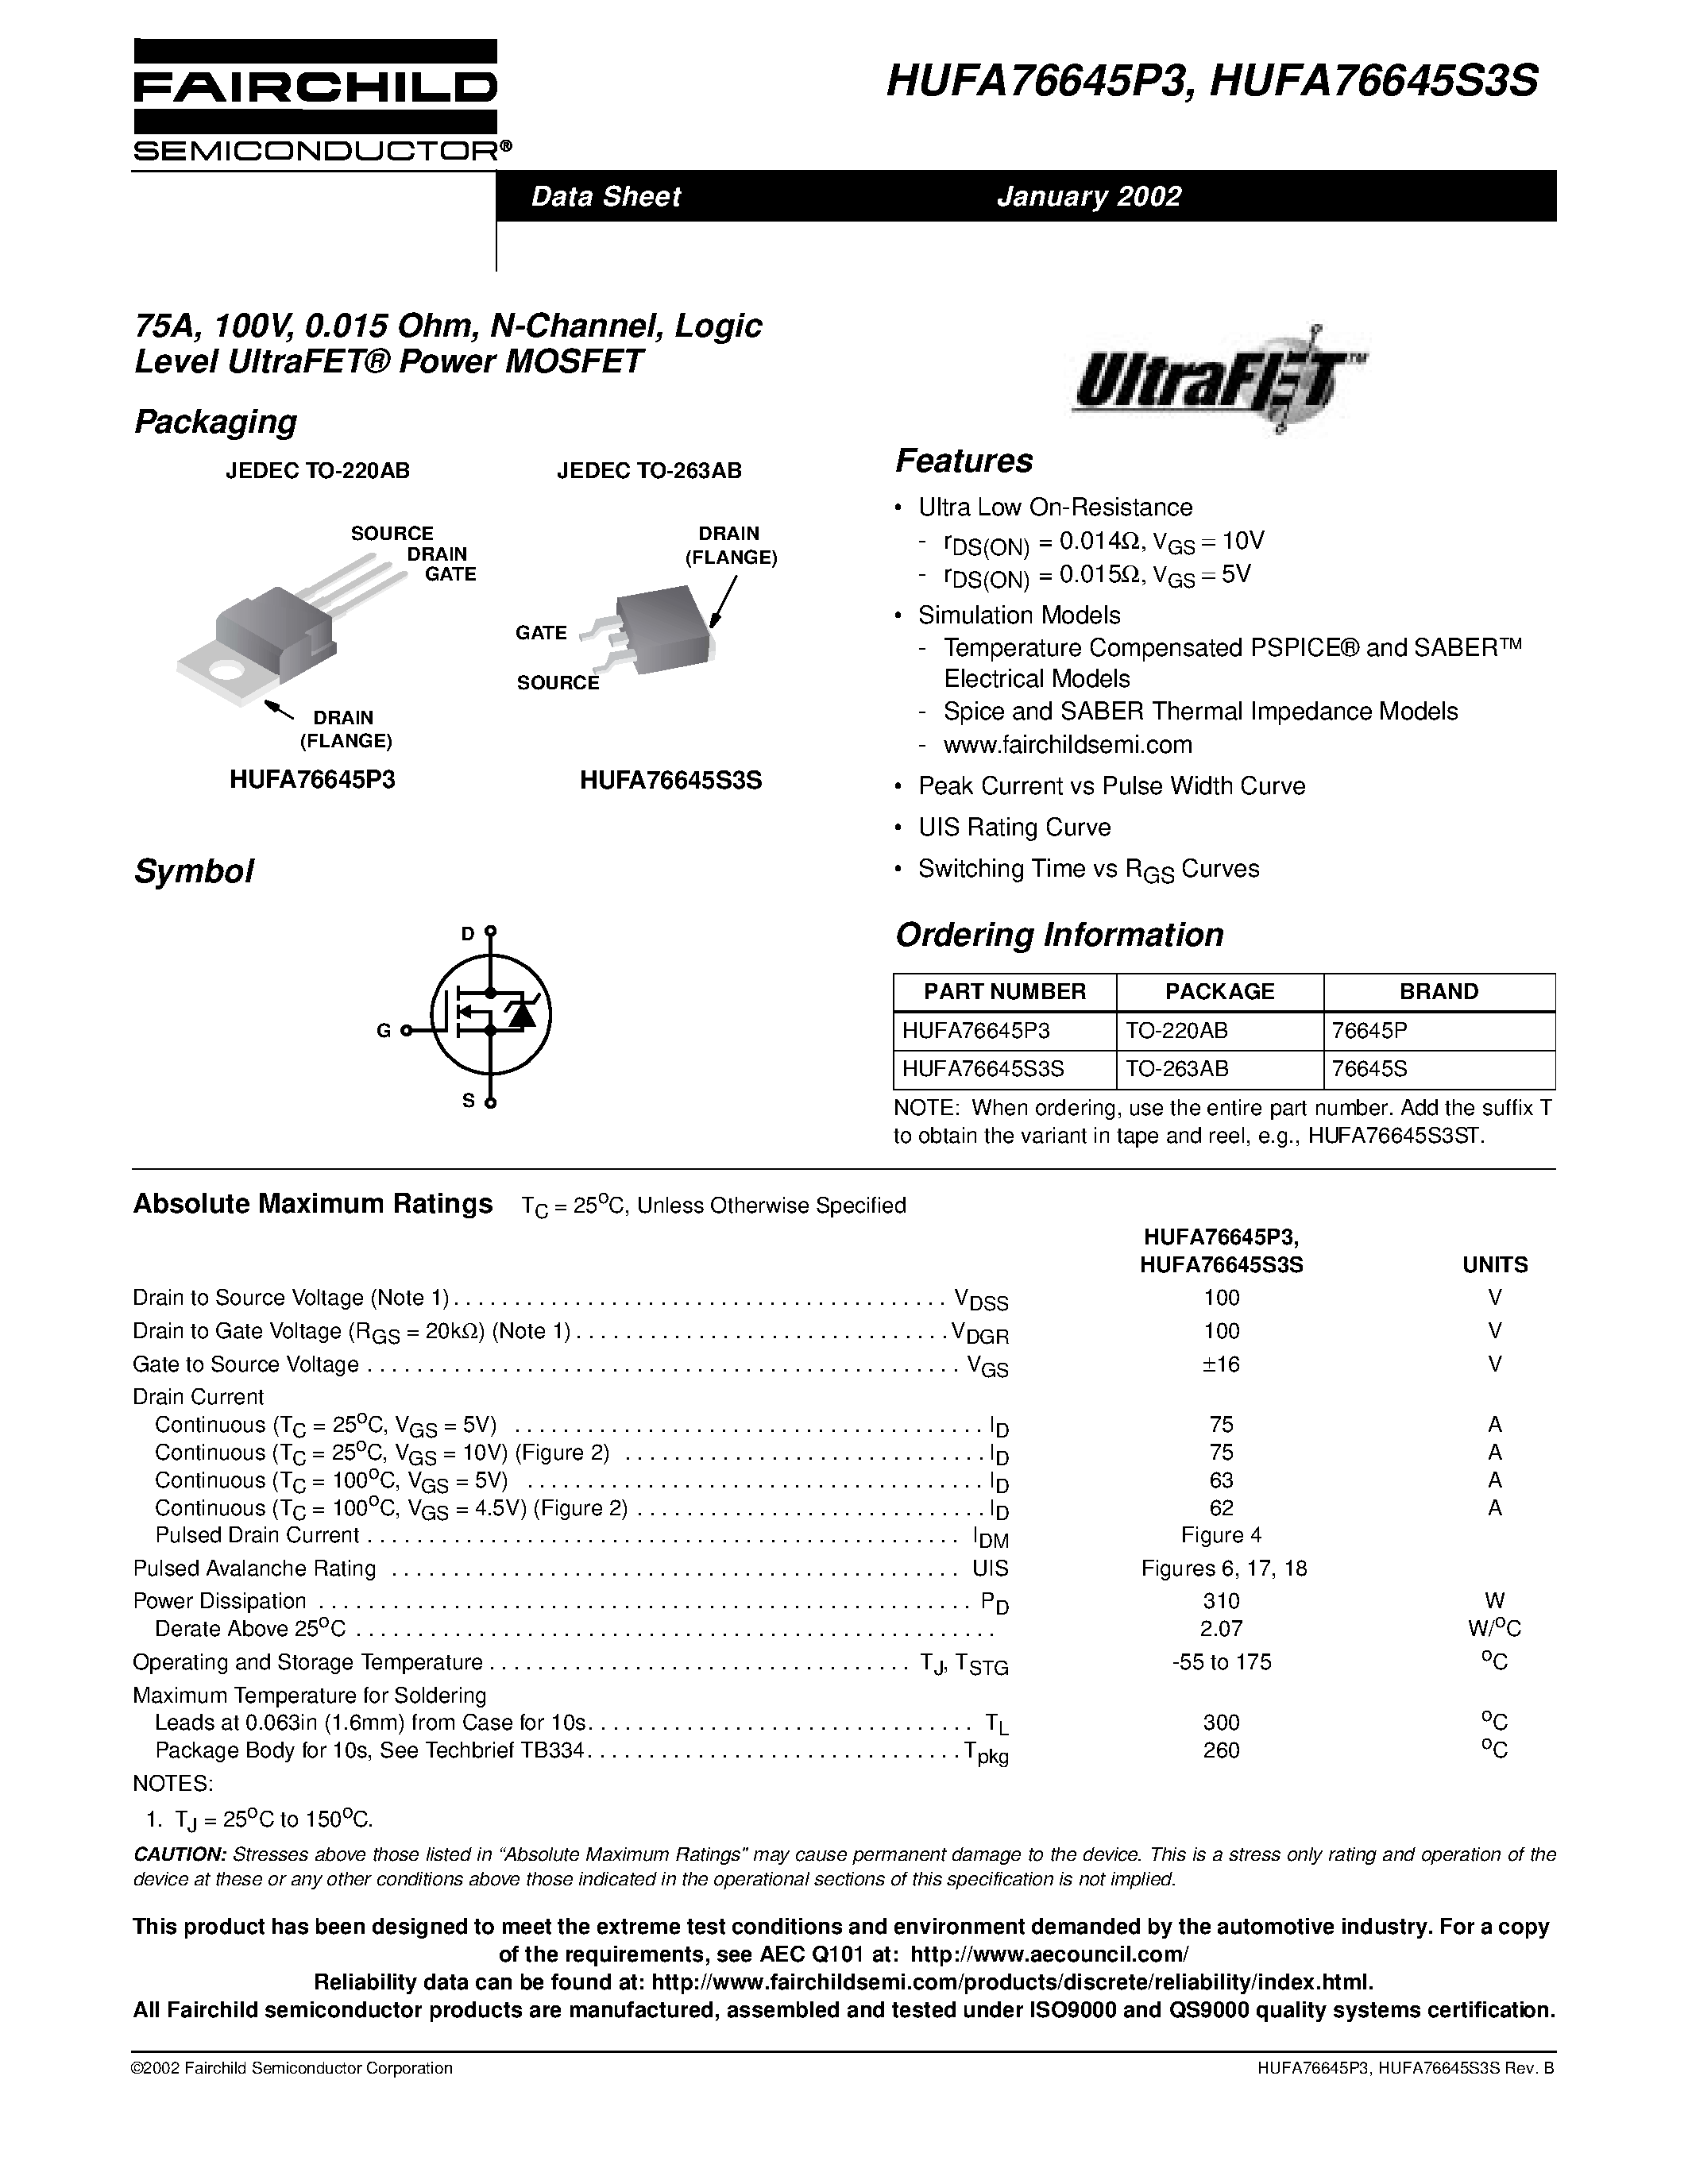 Даташит HUFA76645S3S - 75A/ 100V/ 0.015 Ohm/ N-Channel/ Logic Level UltraFET Power MOSFET страница 1